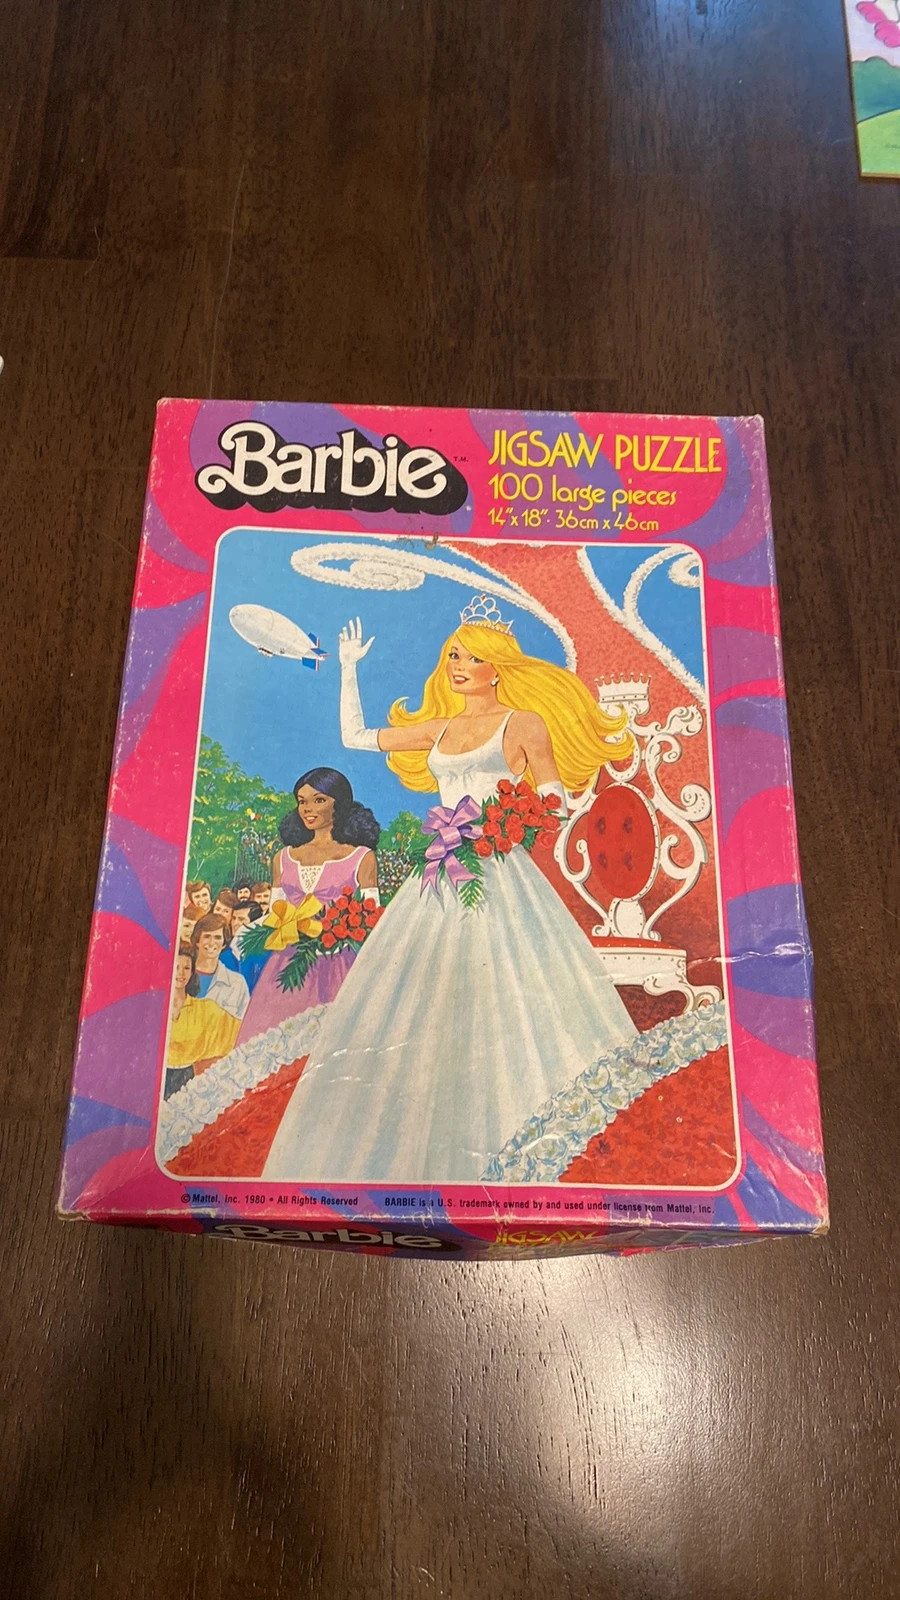 Barbie Jigsaw Puzzle - 100 Pieces